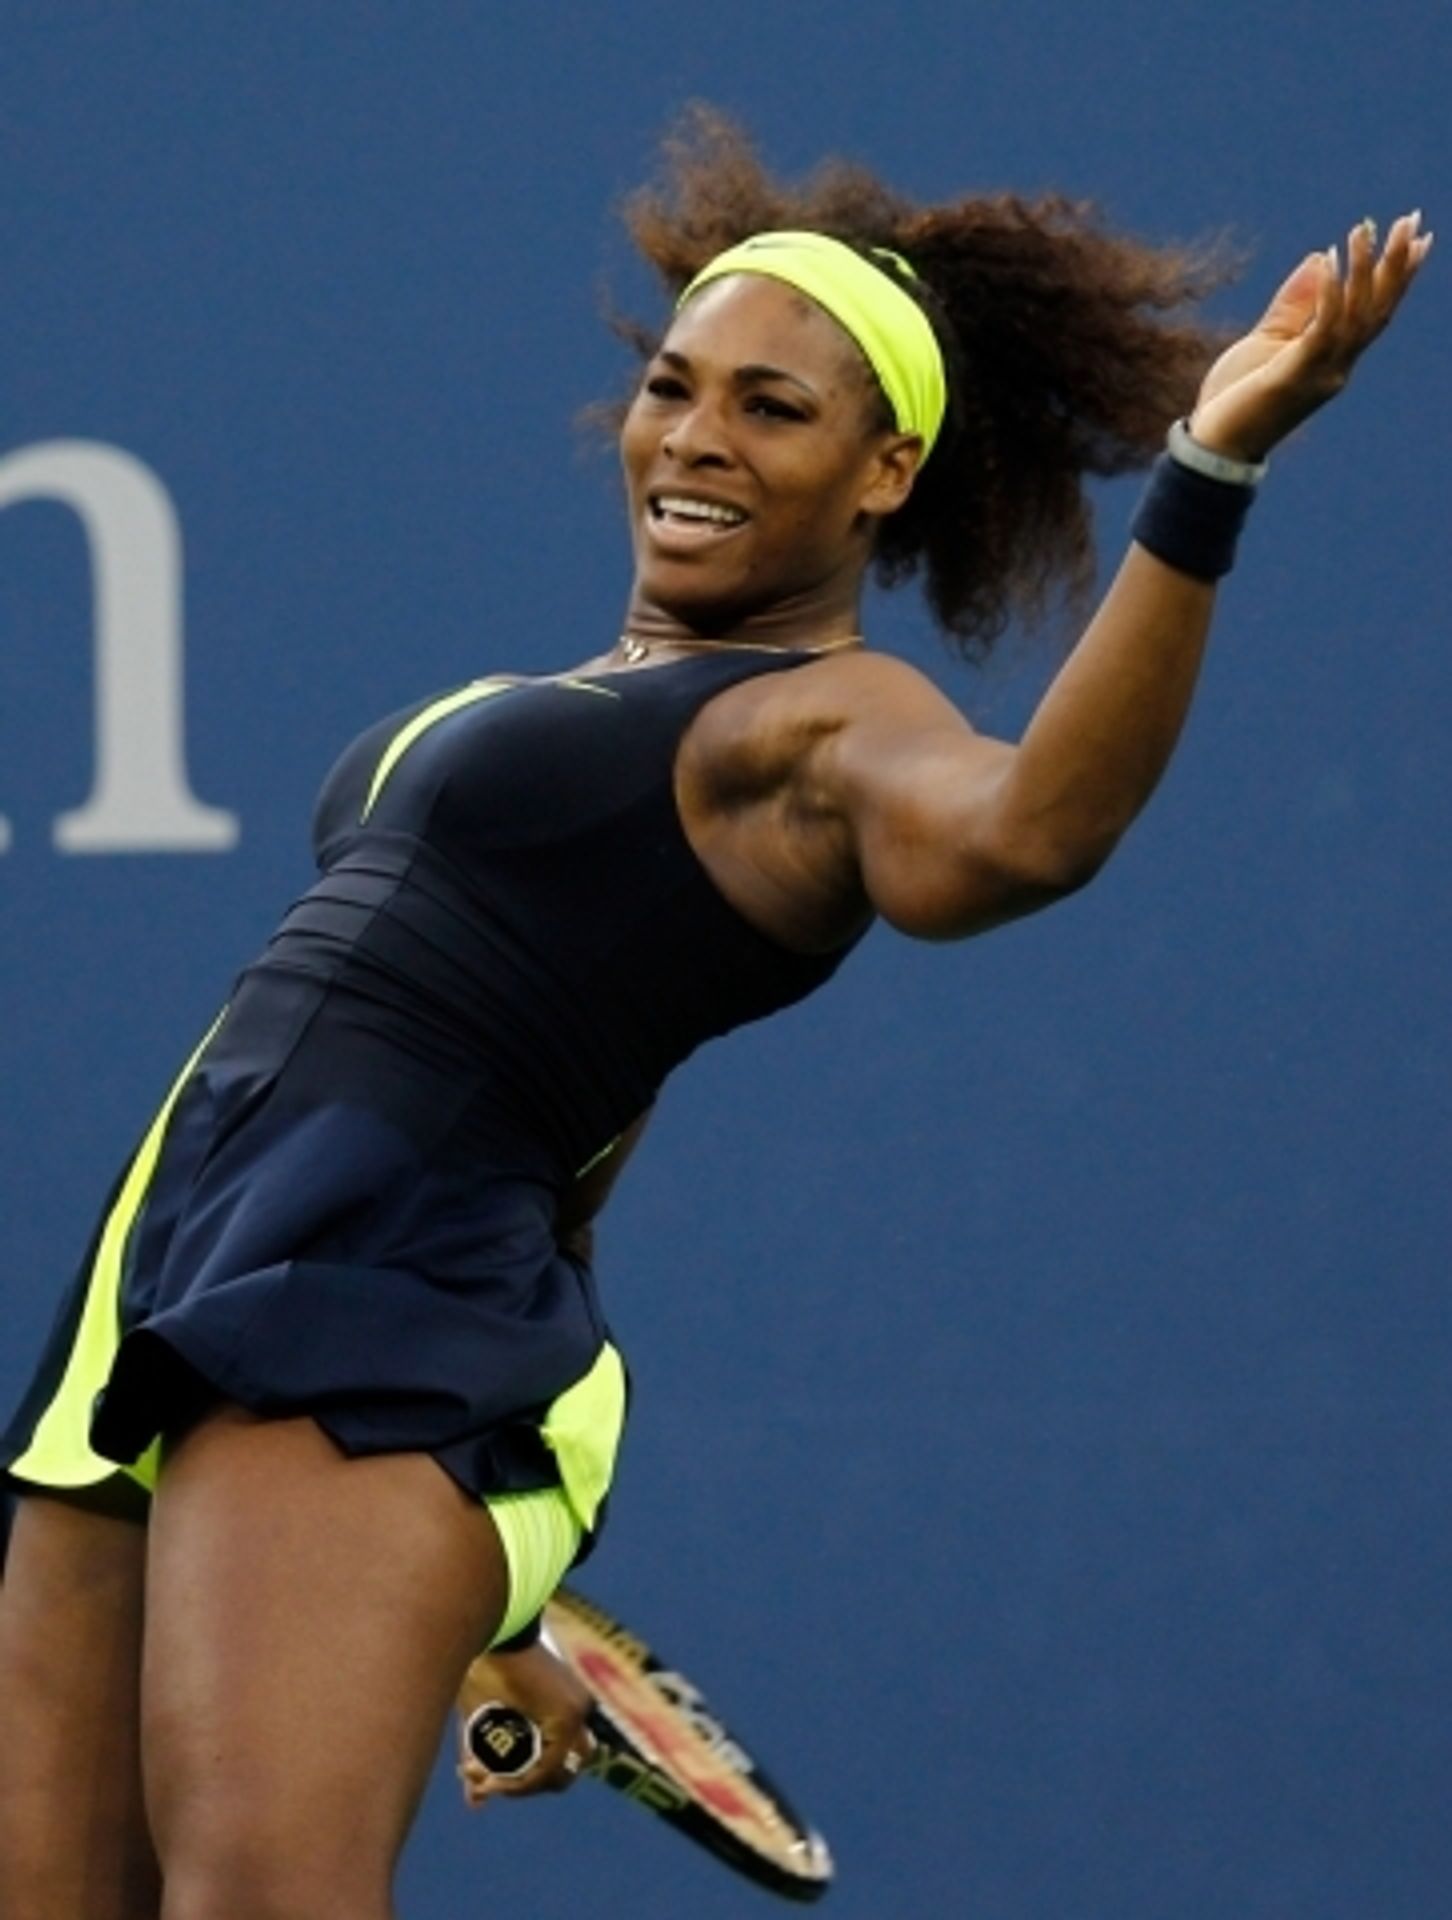 Serena Williams mrakodrapy - 16 - GALERIE: Serena Williams pózuje před mrakodrapy (8/14)